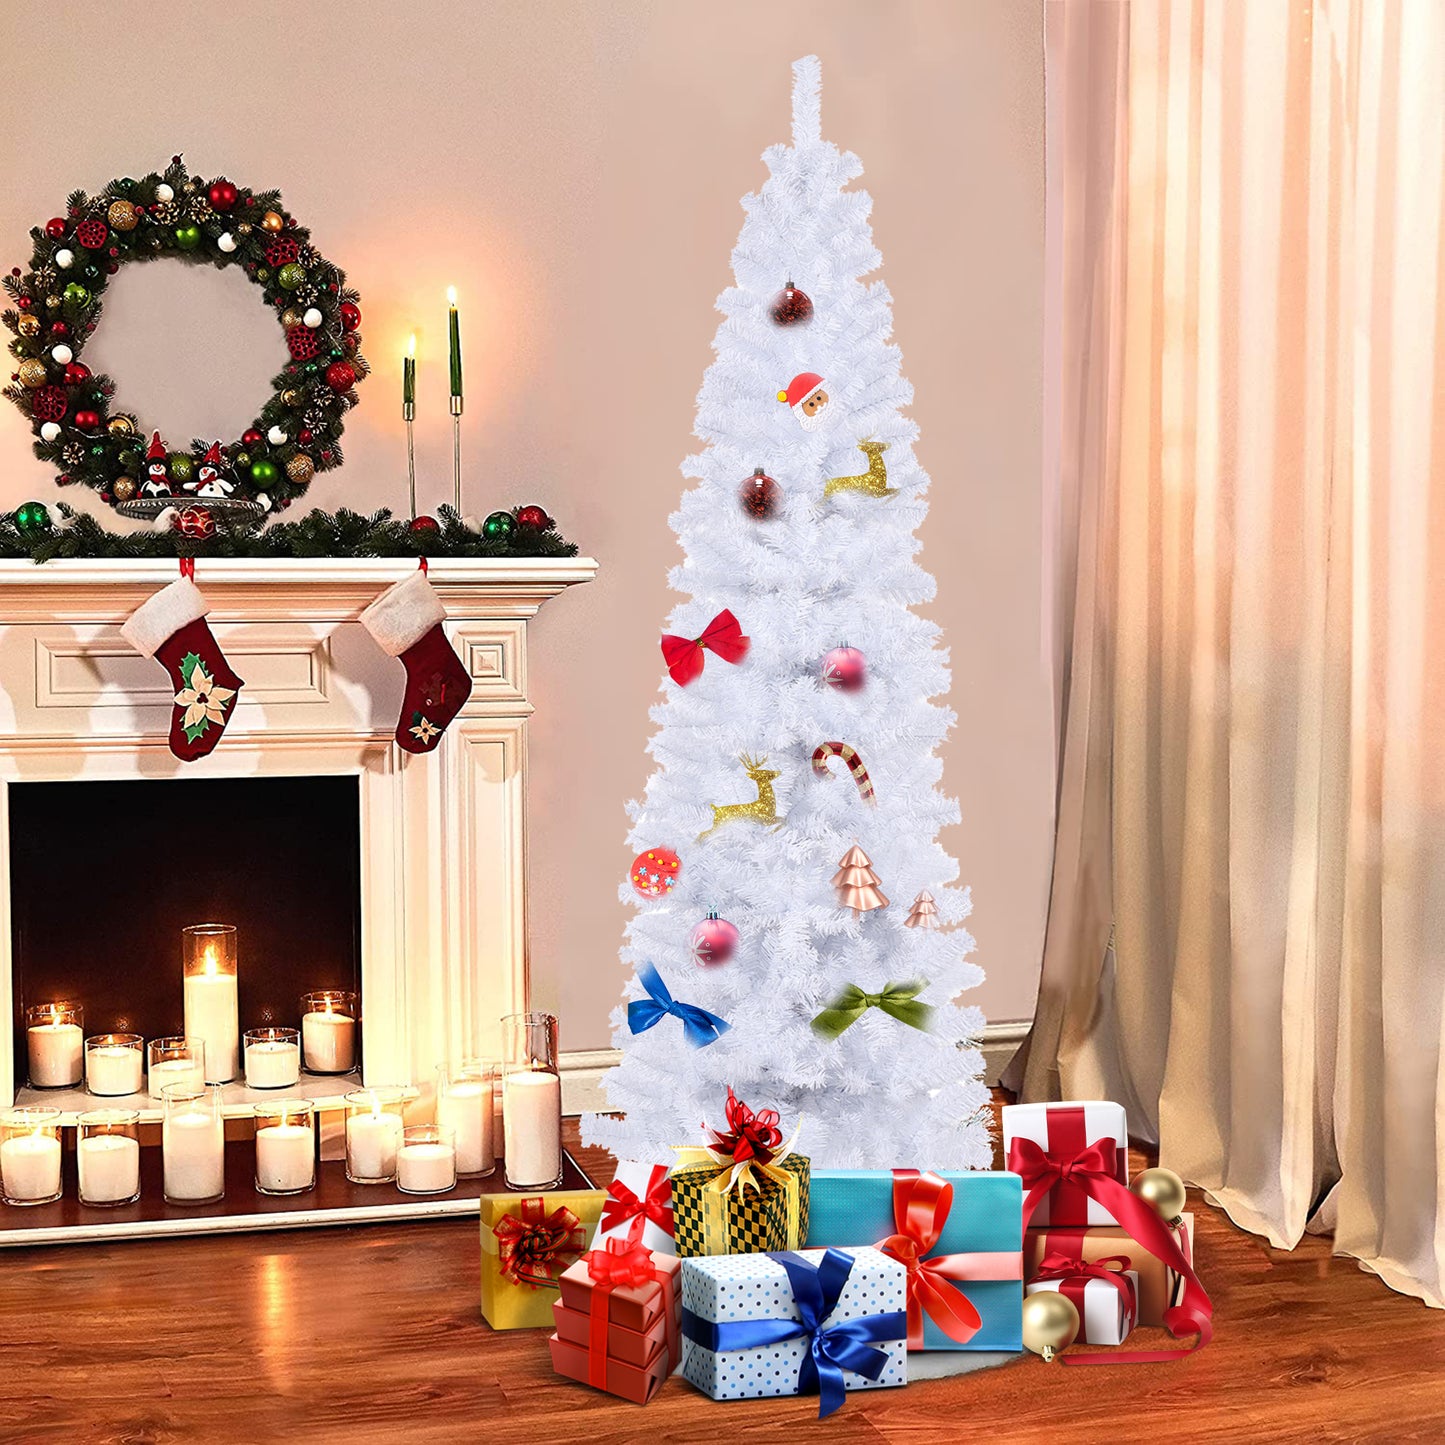 SYNGAR 7.5FT Pencil Christmas Tree, Slim Artificial Xmas Tree with 840 Branch Tips, Christmas Decor, Black